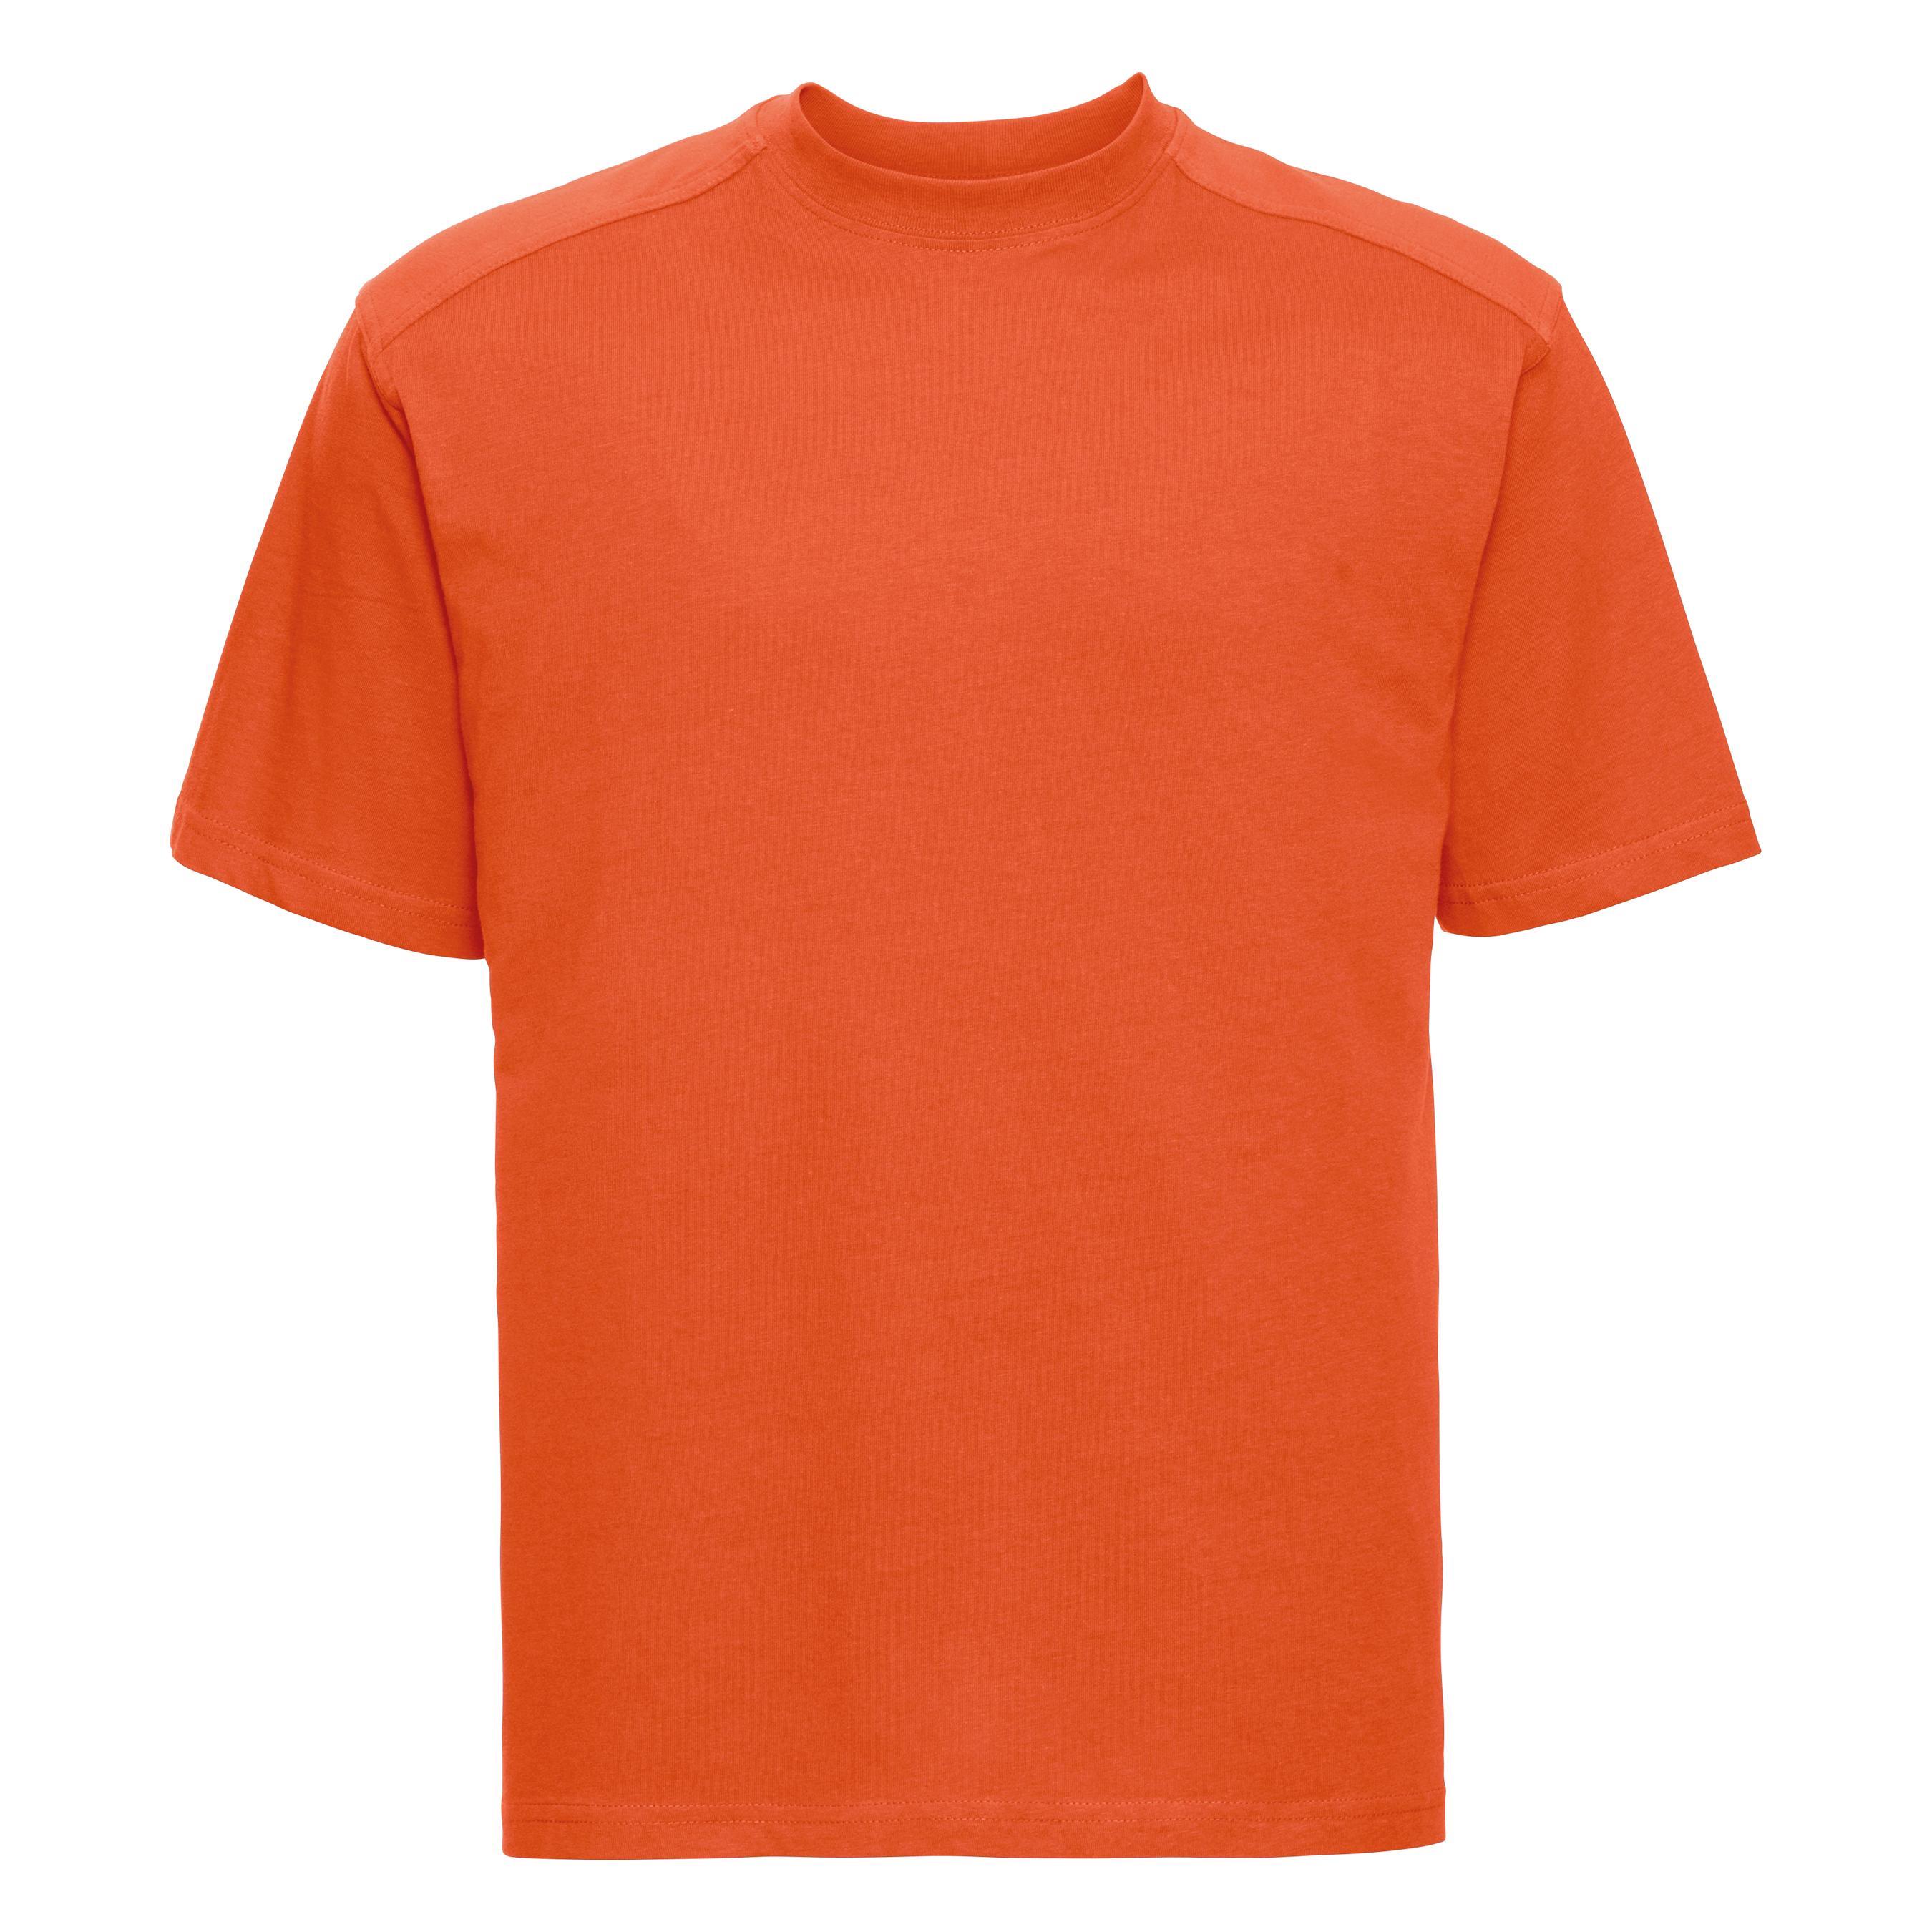 Russell Europe Mens Workwear Short Sleeve Cotton T-Shirt (Orange) (XL)